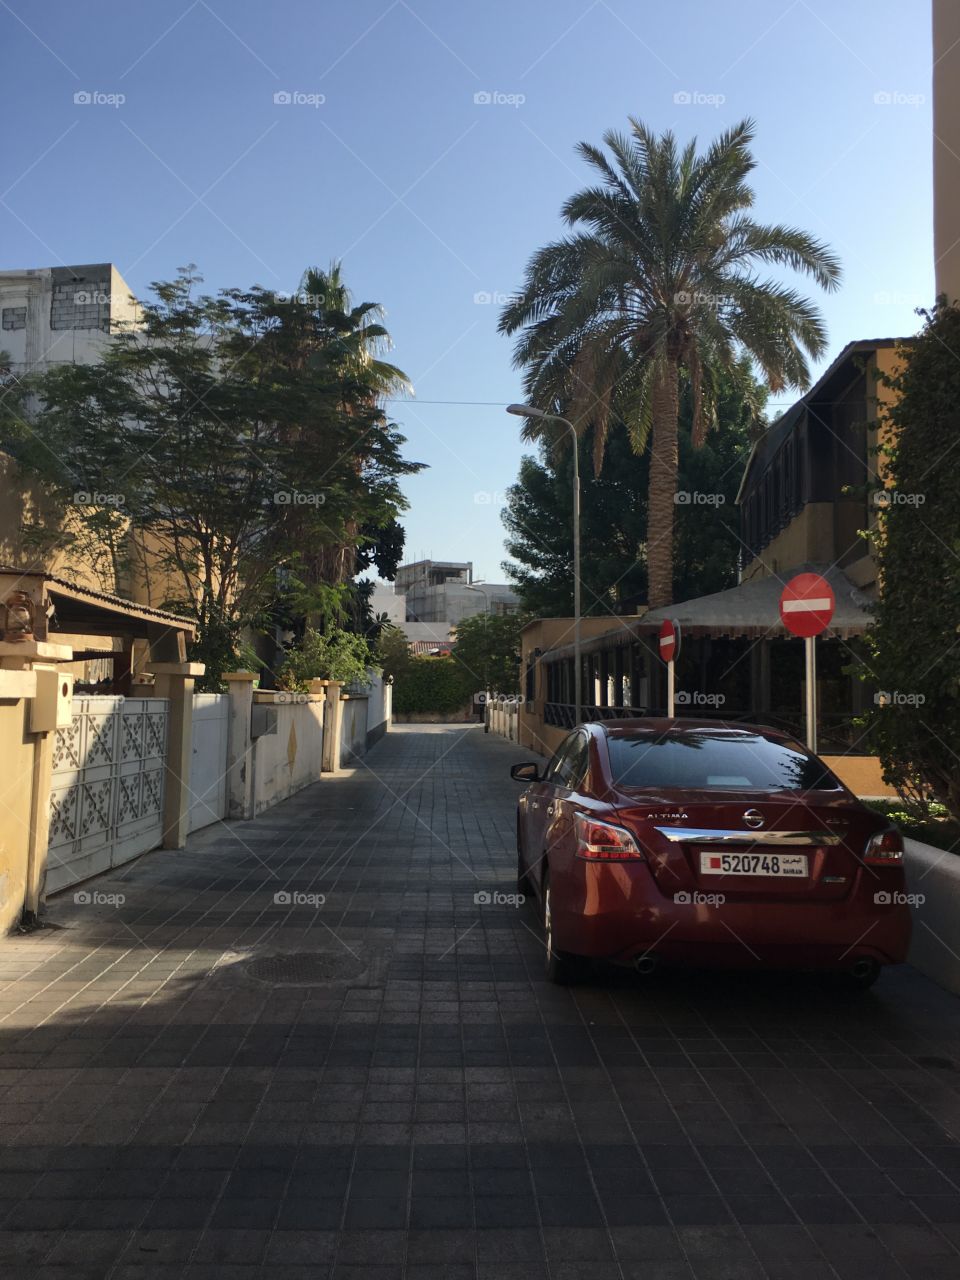 Bahrain 🇧🇭 streets 